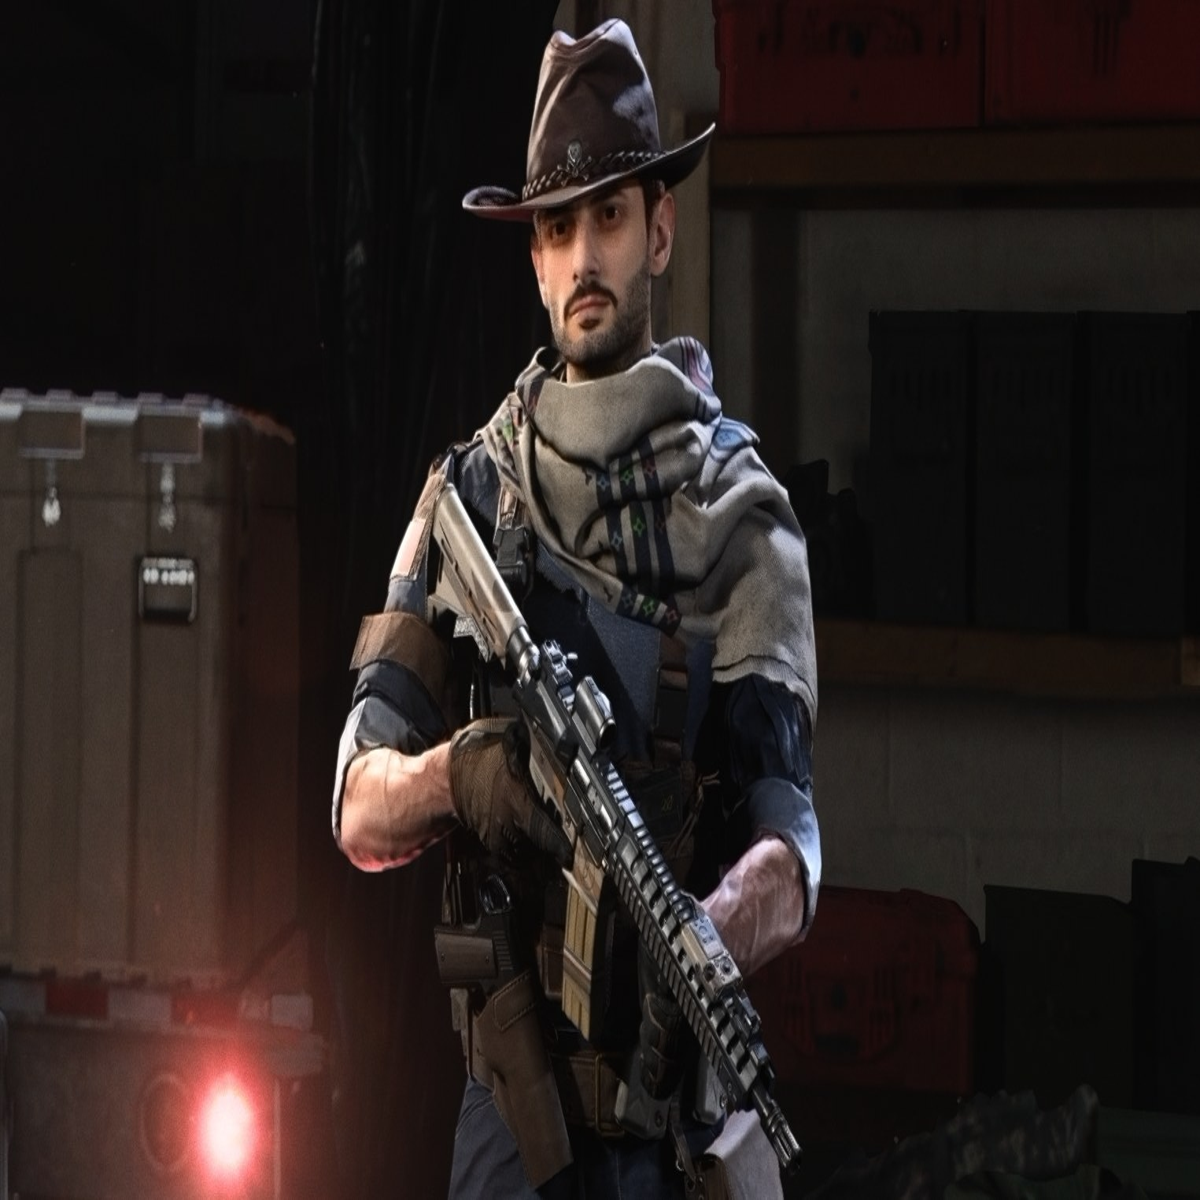 Steam Workshop::COD Modern Warfare 2 - Campaign Characters (NPCs